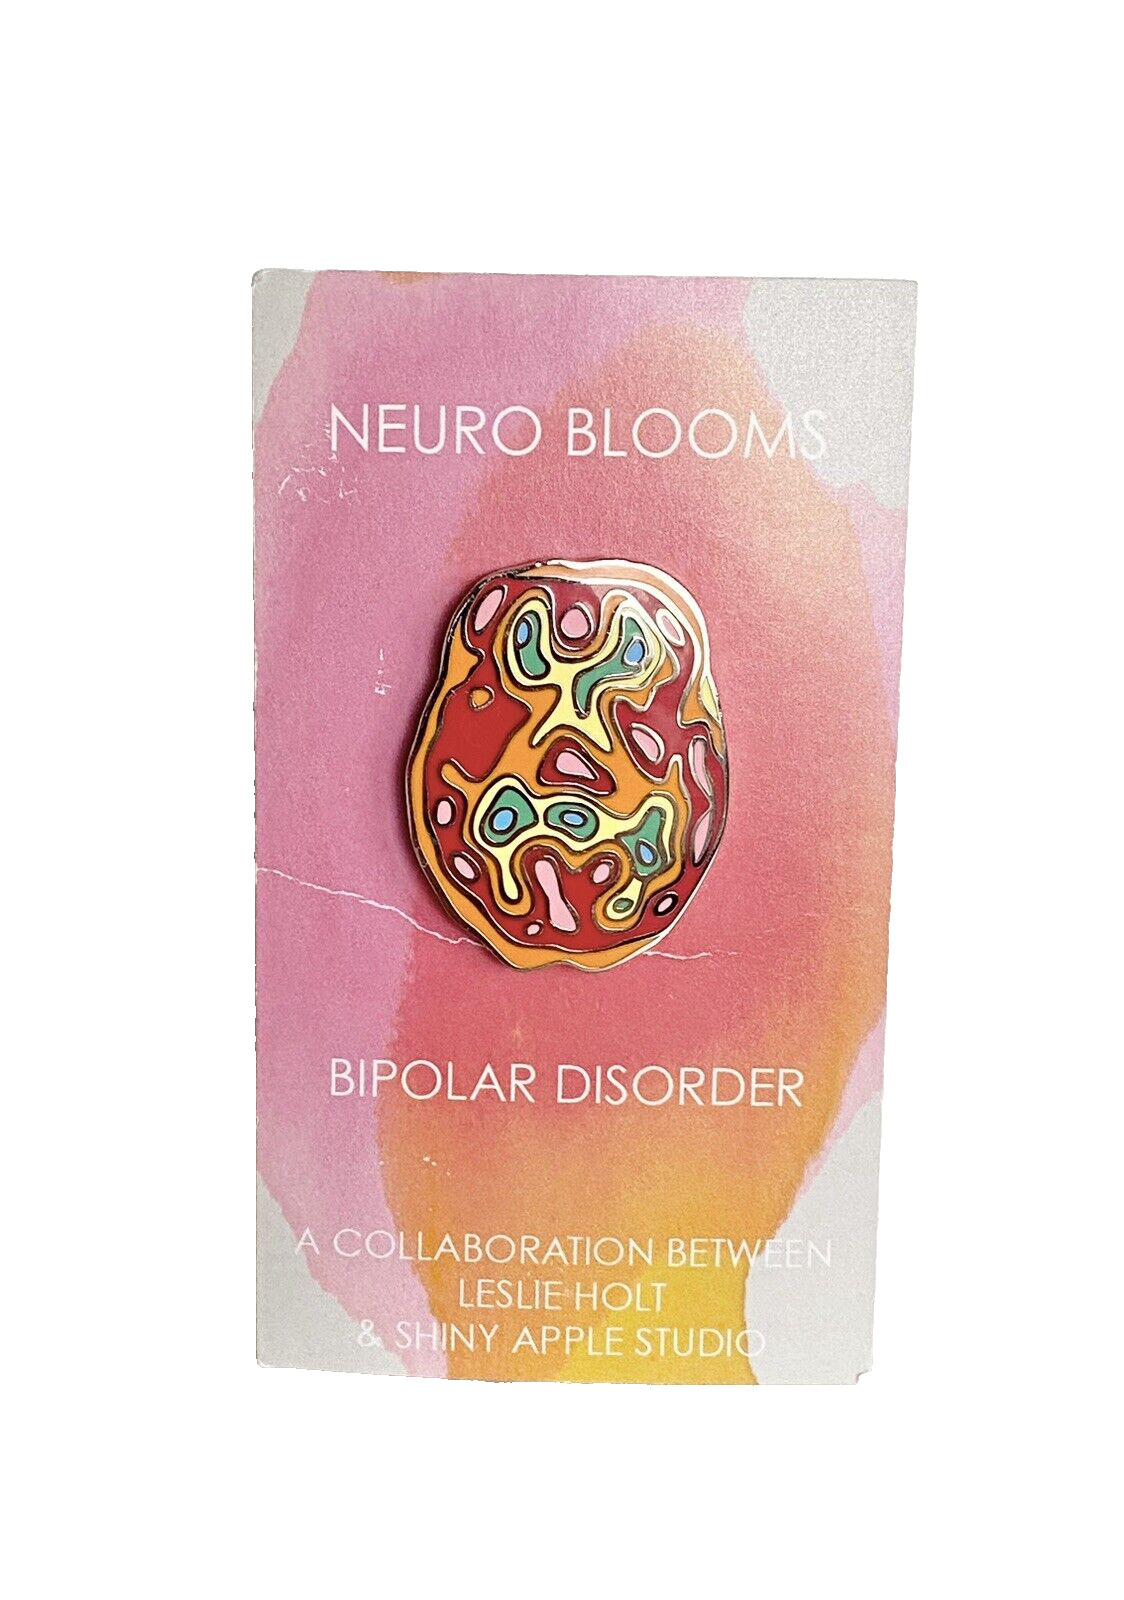 Neuro Blooms Bipolar Disorder Mental Health Awareness Pin